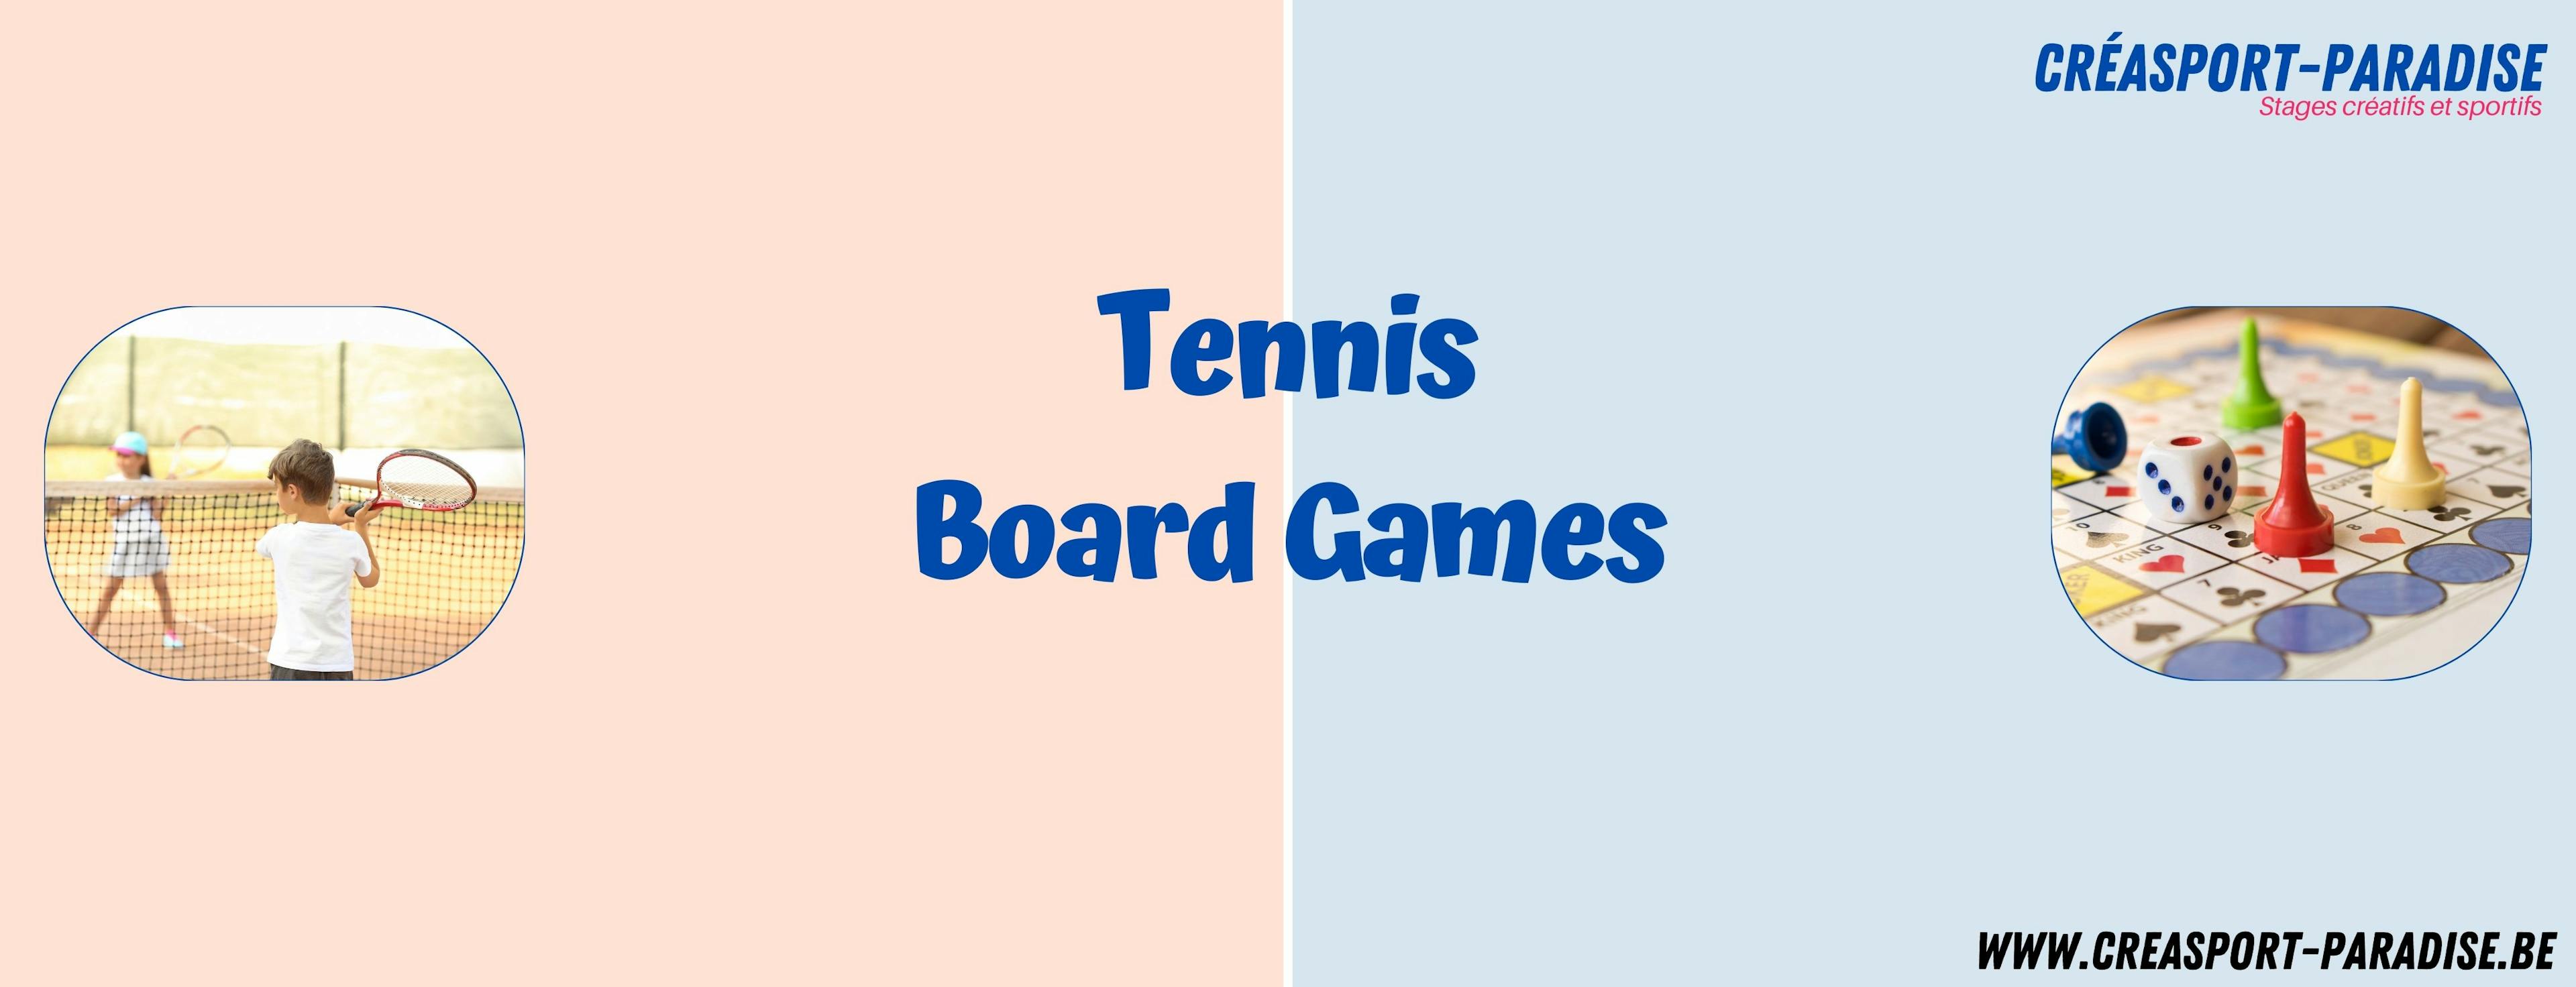 Tennis - Board Games